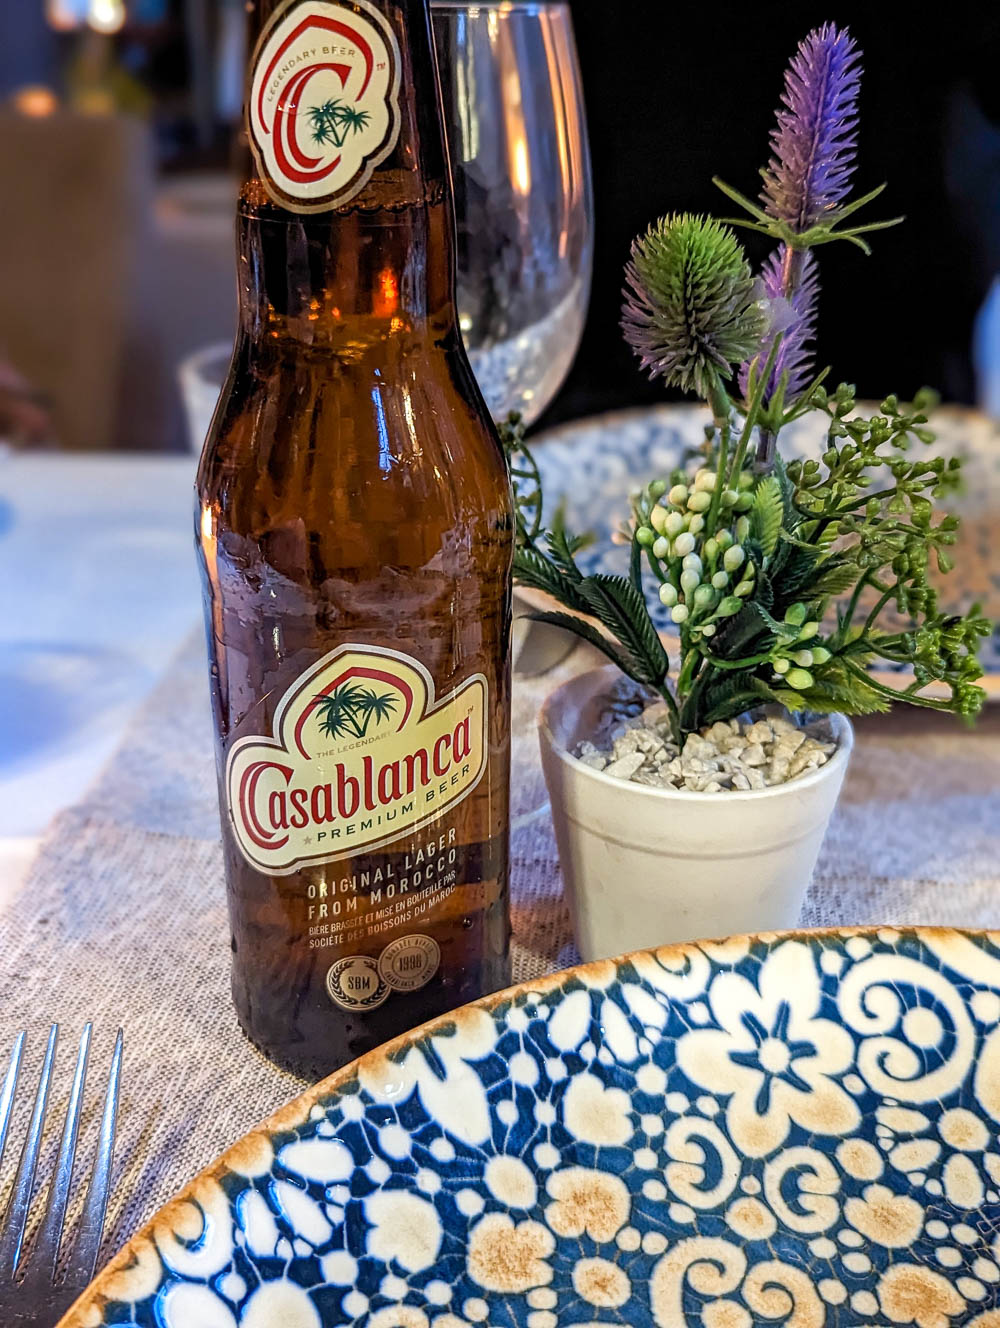 bottle of Casablanca beer on a table inside a restaurant